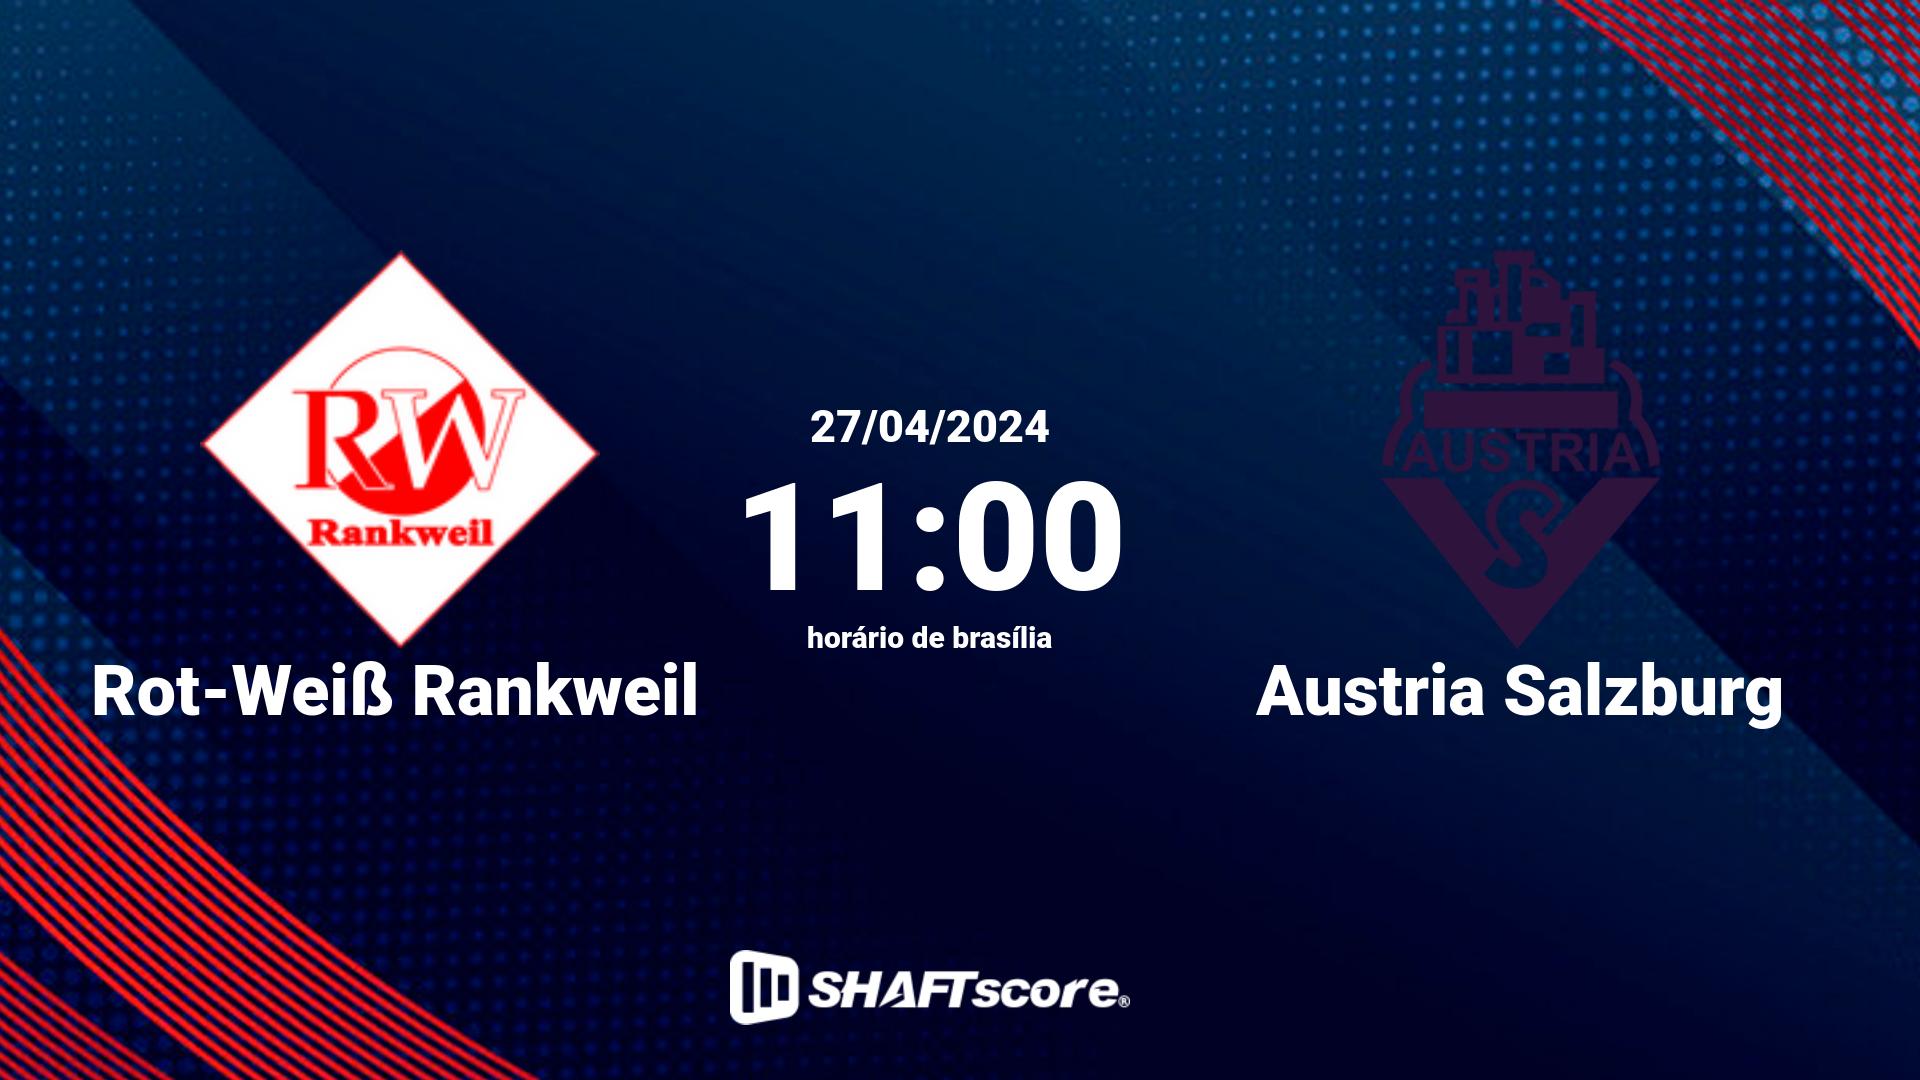 Estatísticas do jogo Rot-Weiß Rankweil vs Austria Salzburg 27.04 11:00